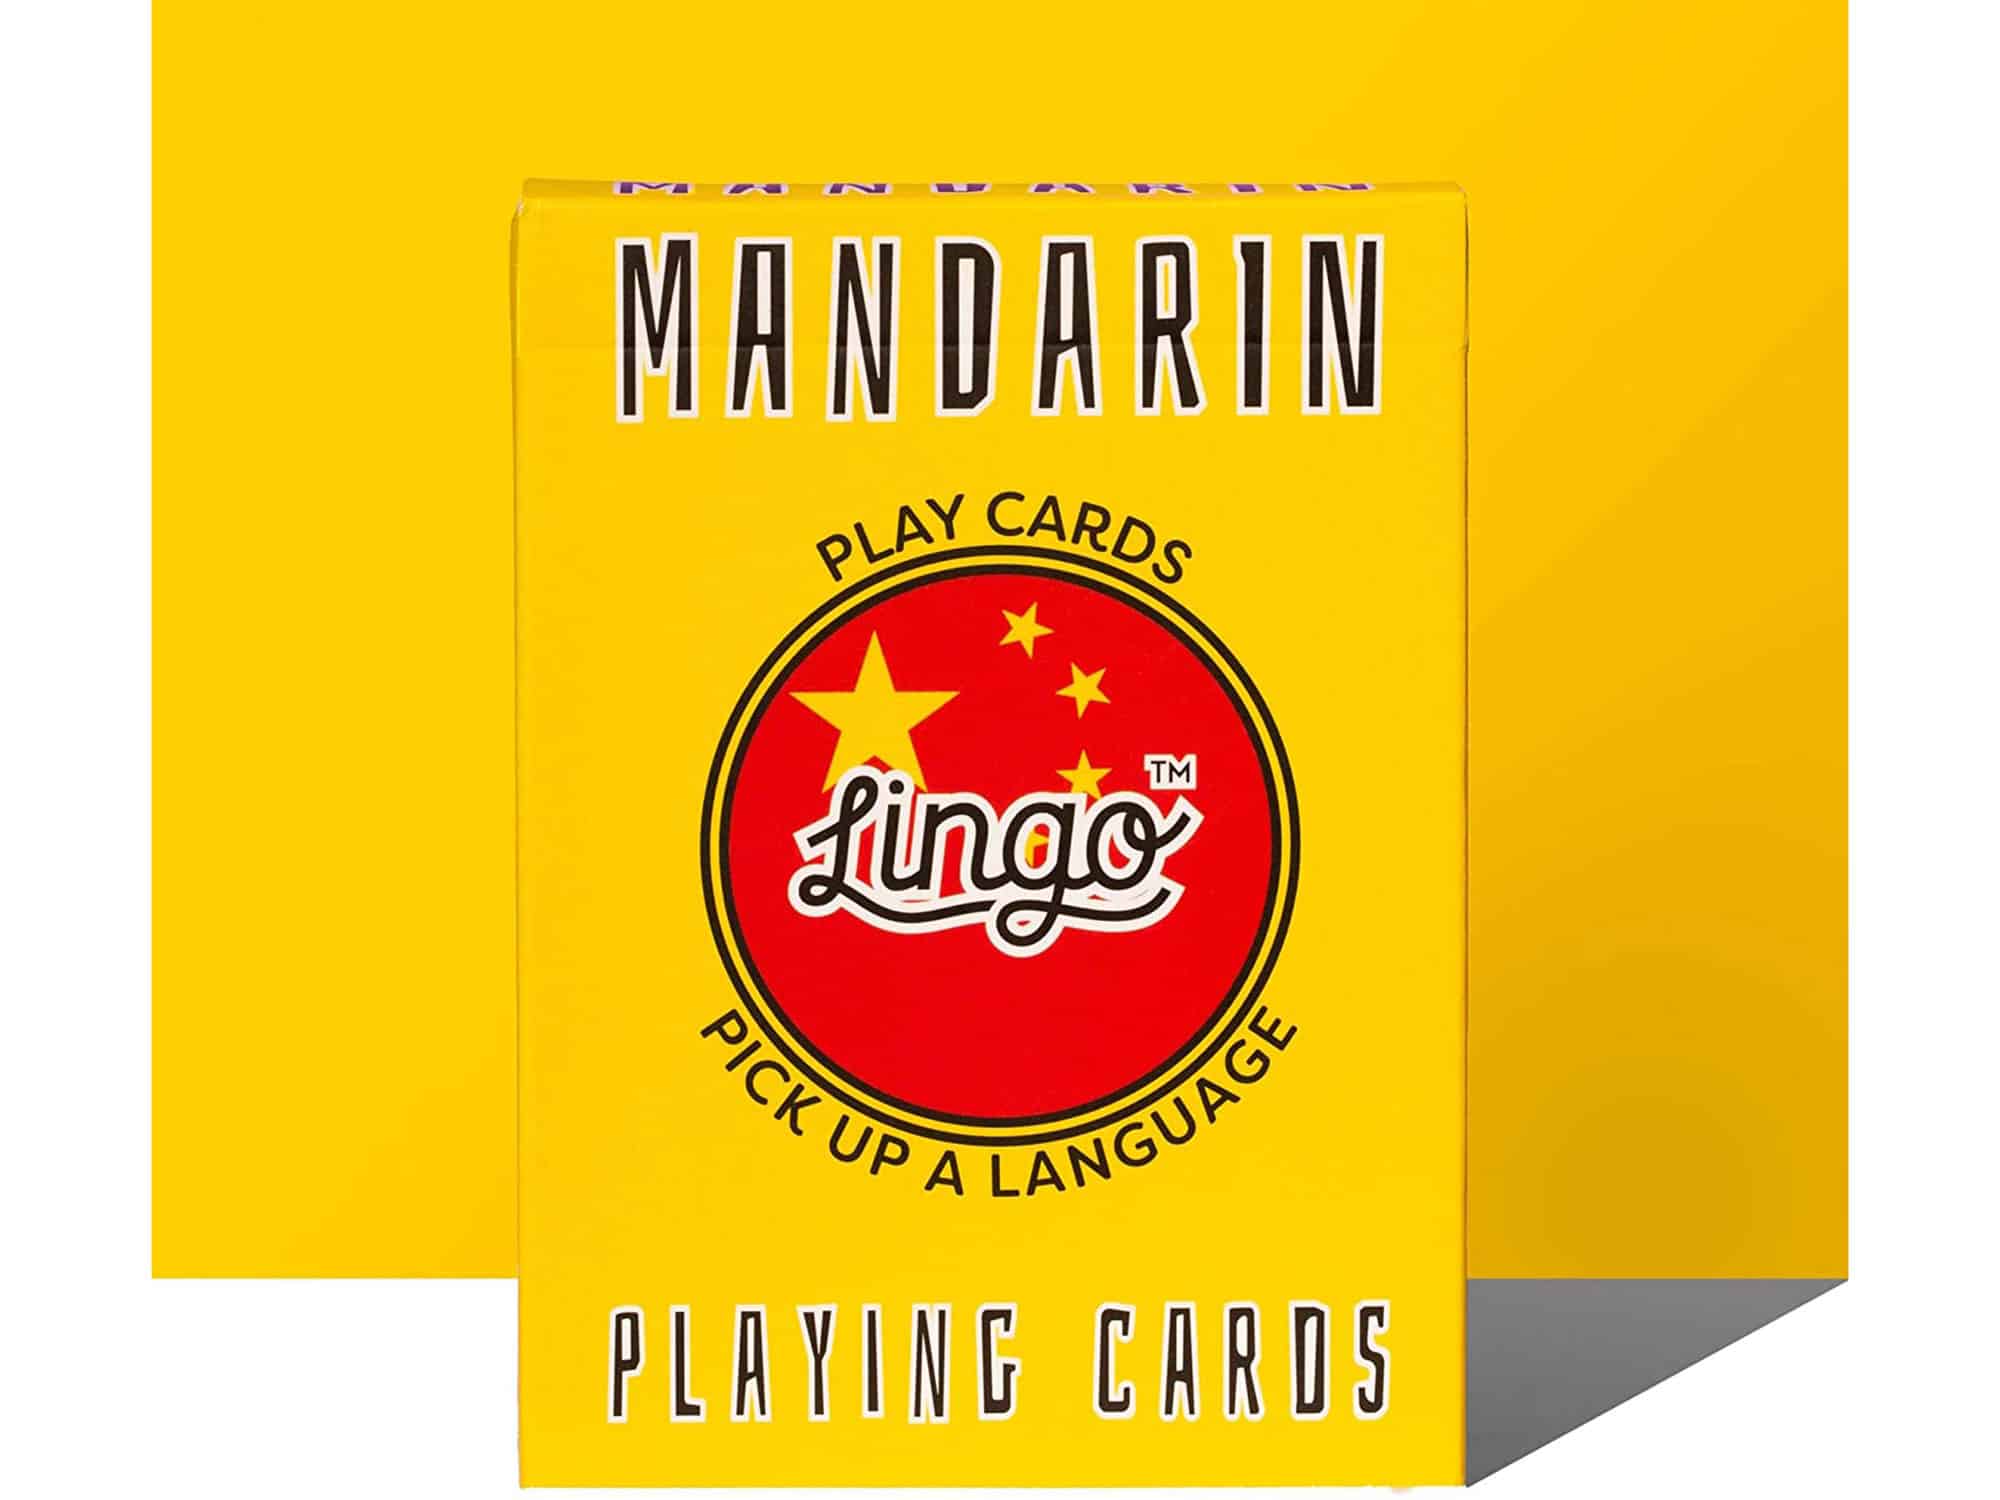 Mandarin cards